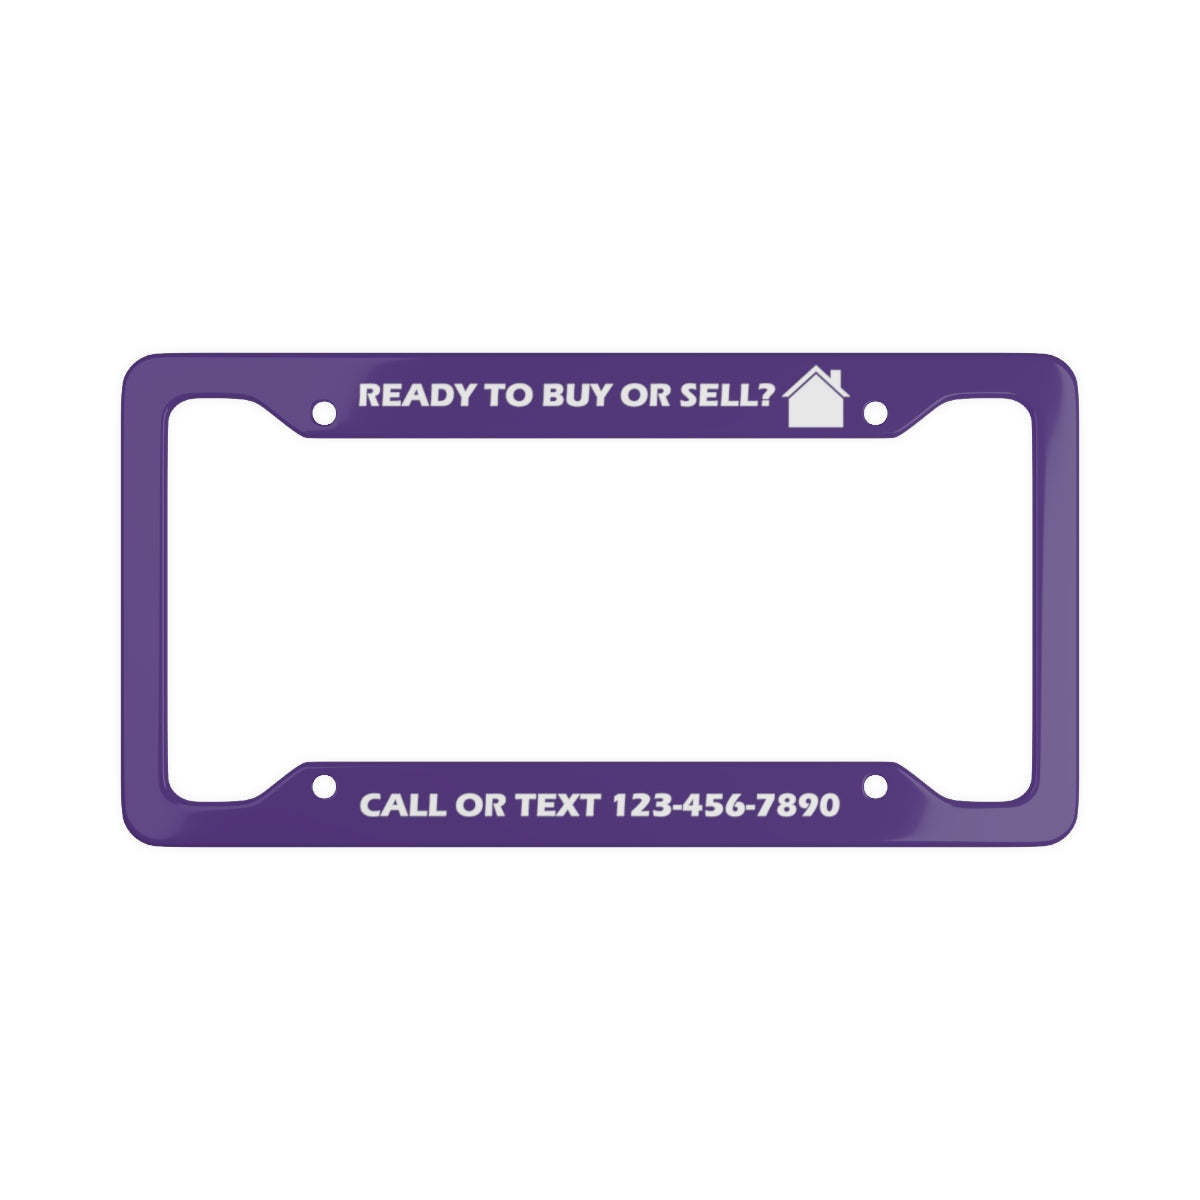 Custom License Plate Frame - Buy/Sell - Purple